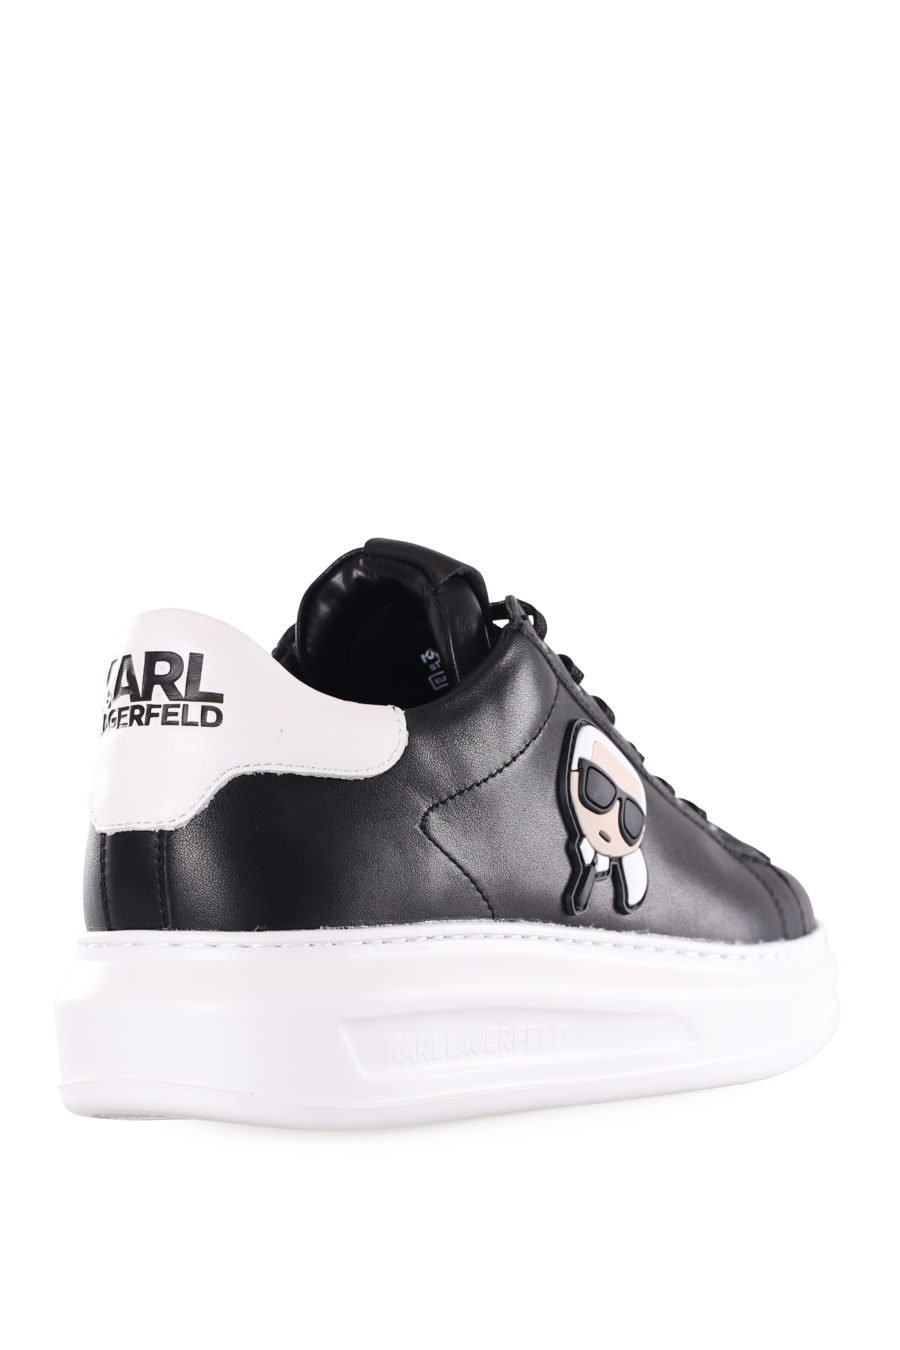 Zapatillas negras con logo "karl" en goma - IMG 9554